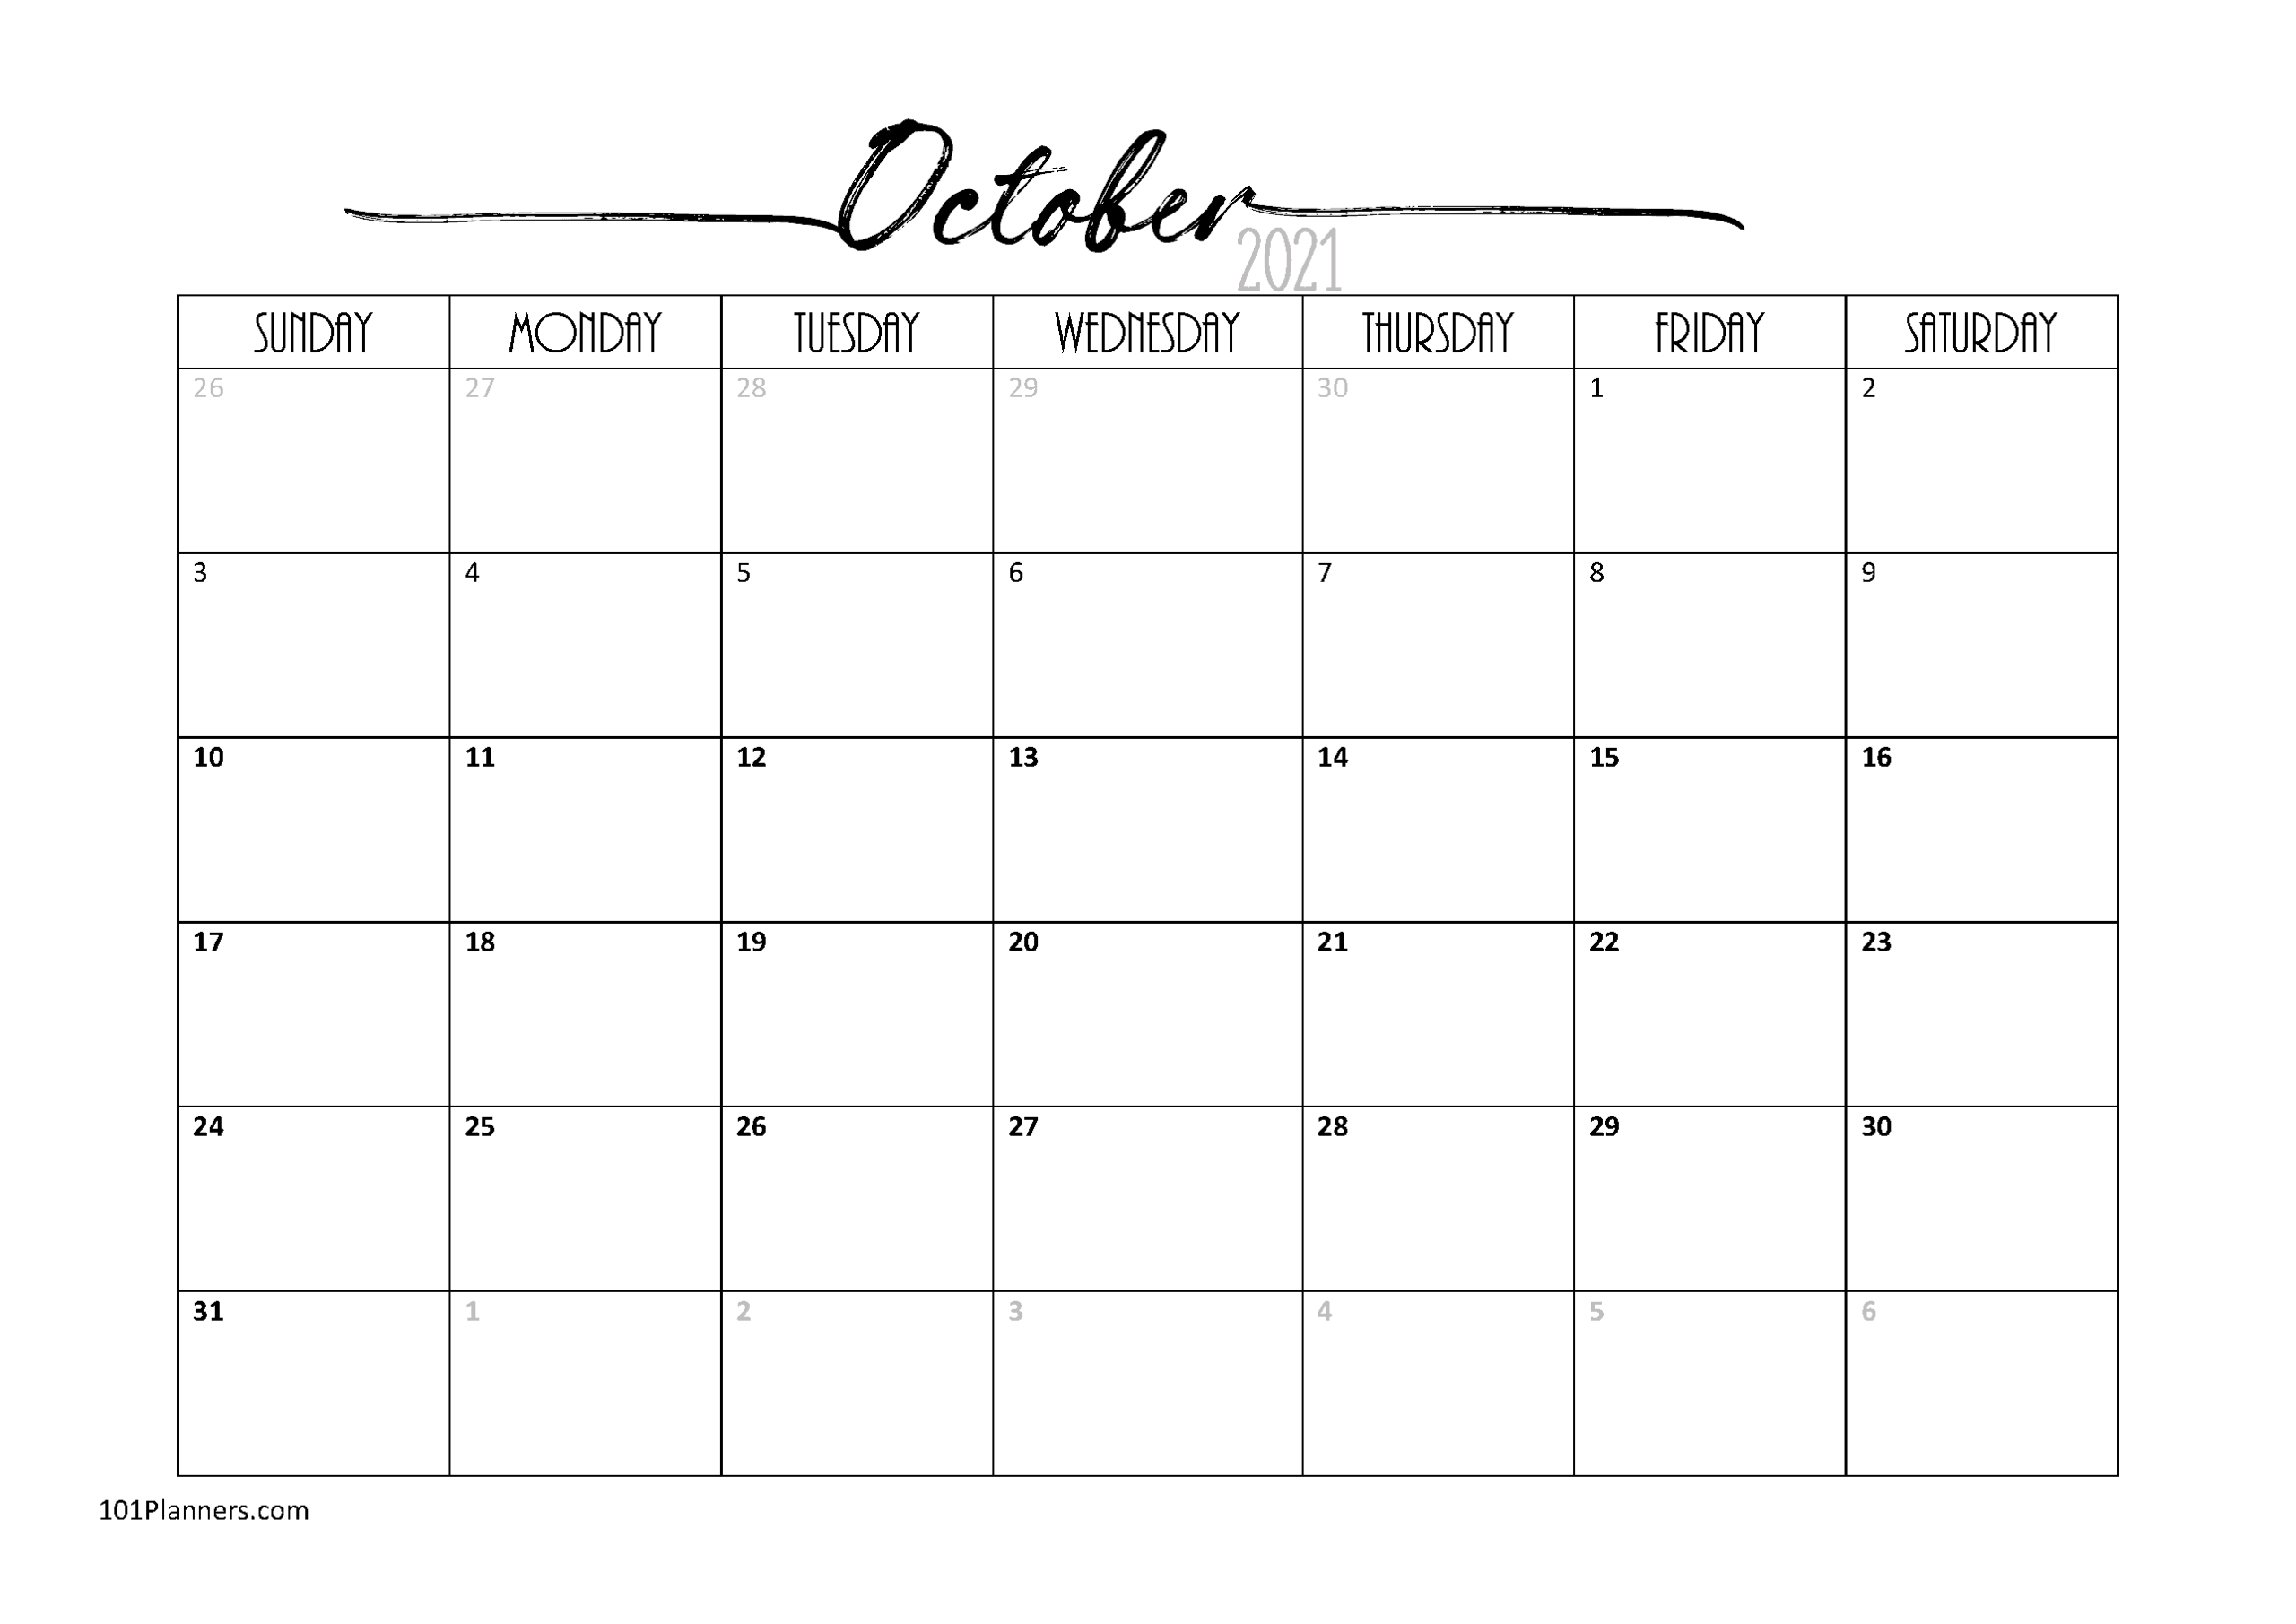 Free Printable October 2021 Calendar | Customize Online